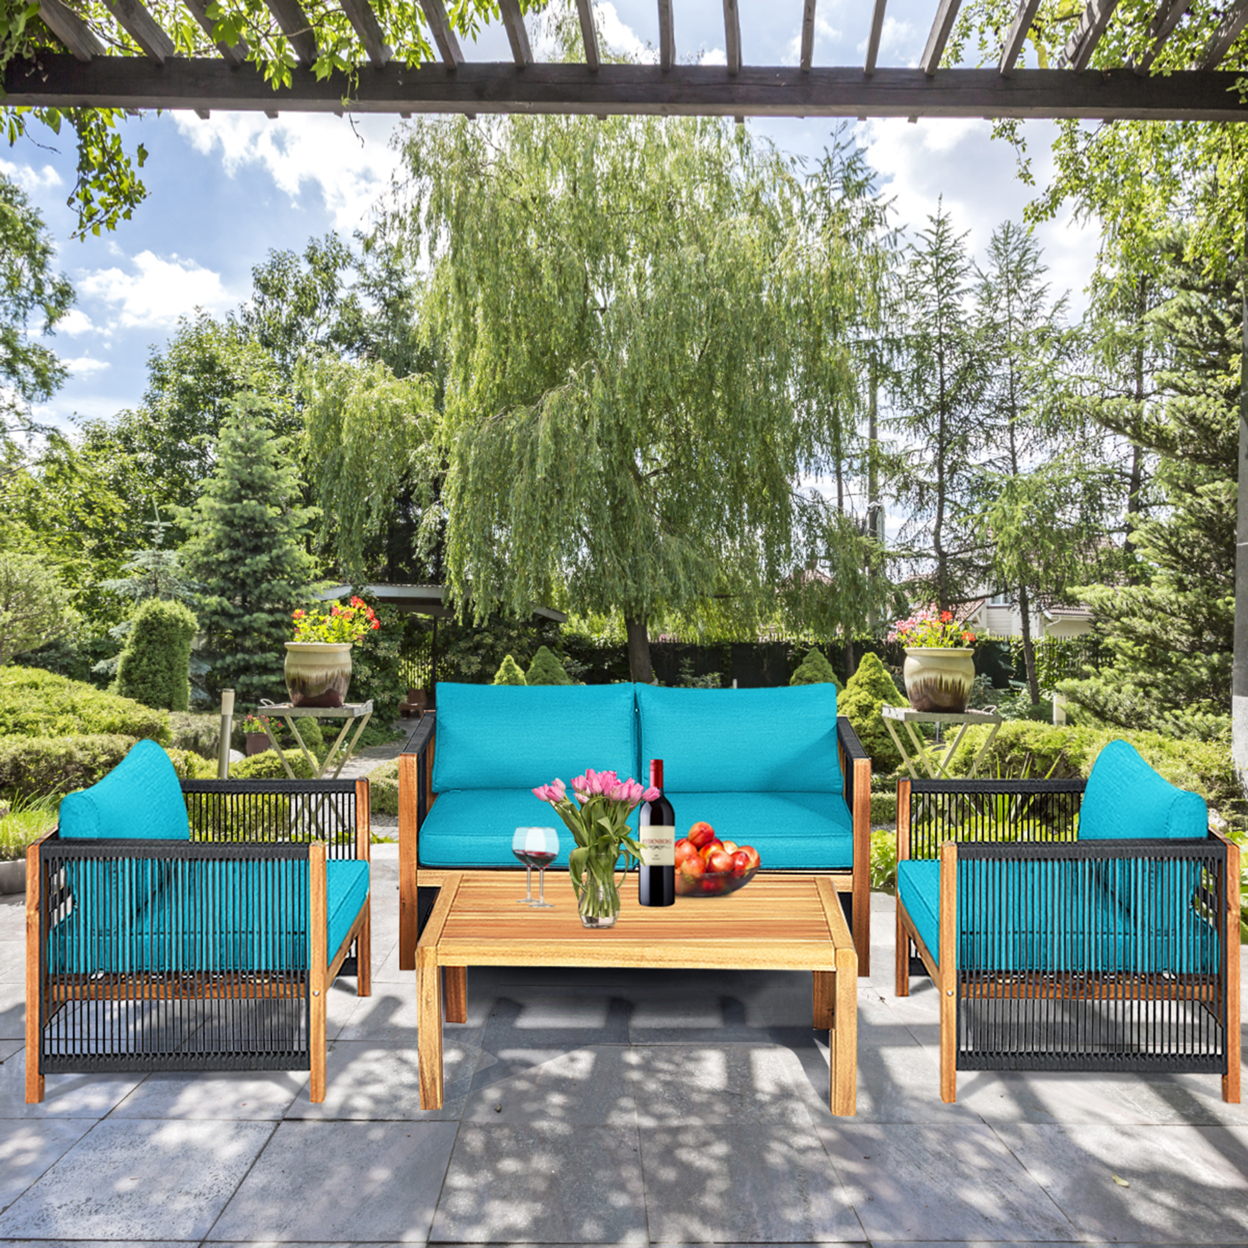 4PCS Acacia Wood Outdoor Patio Furniture Conversation Set W/ Turquoise Cushions